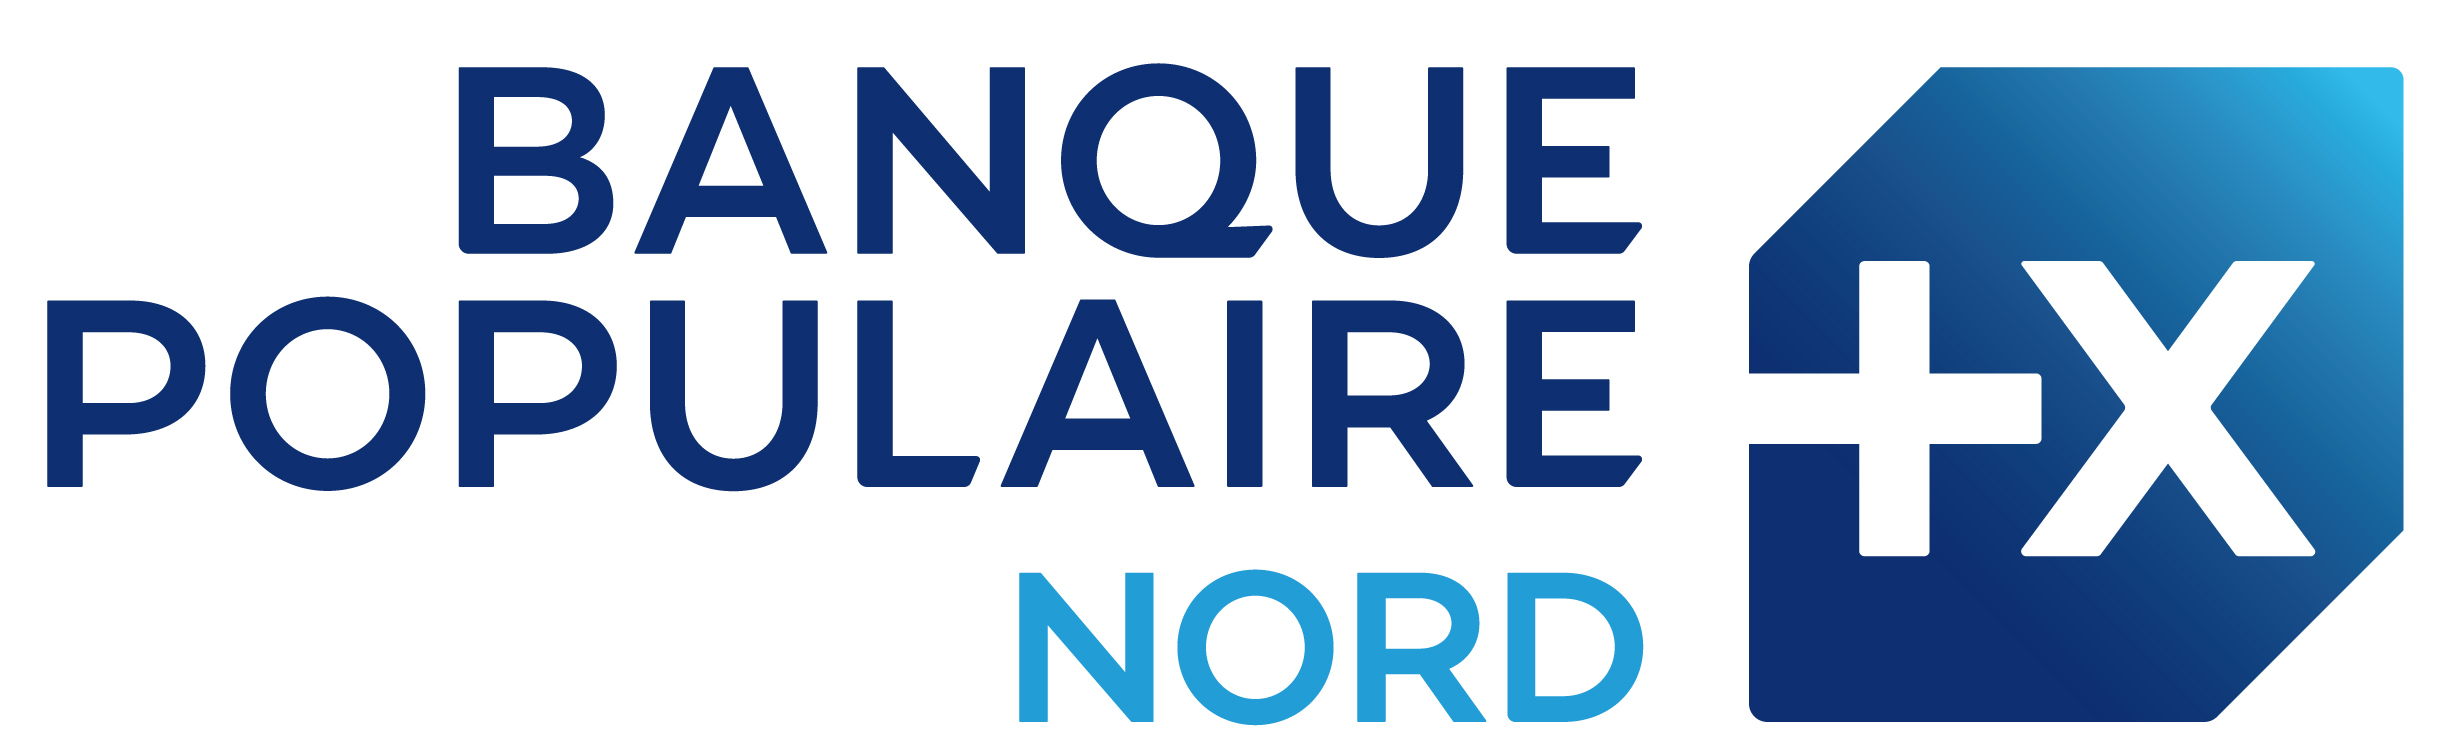 banque populaire nord logo